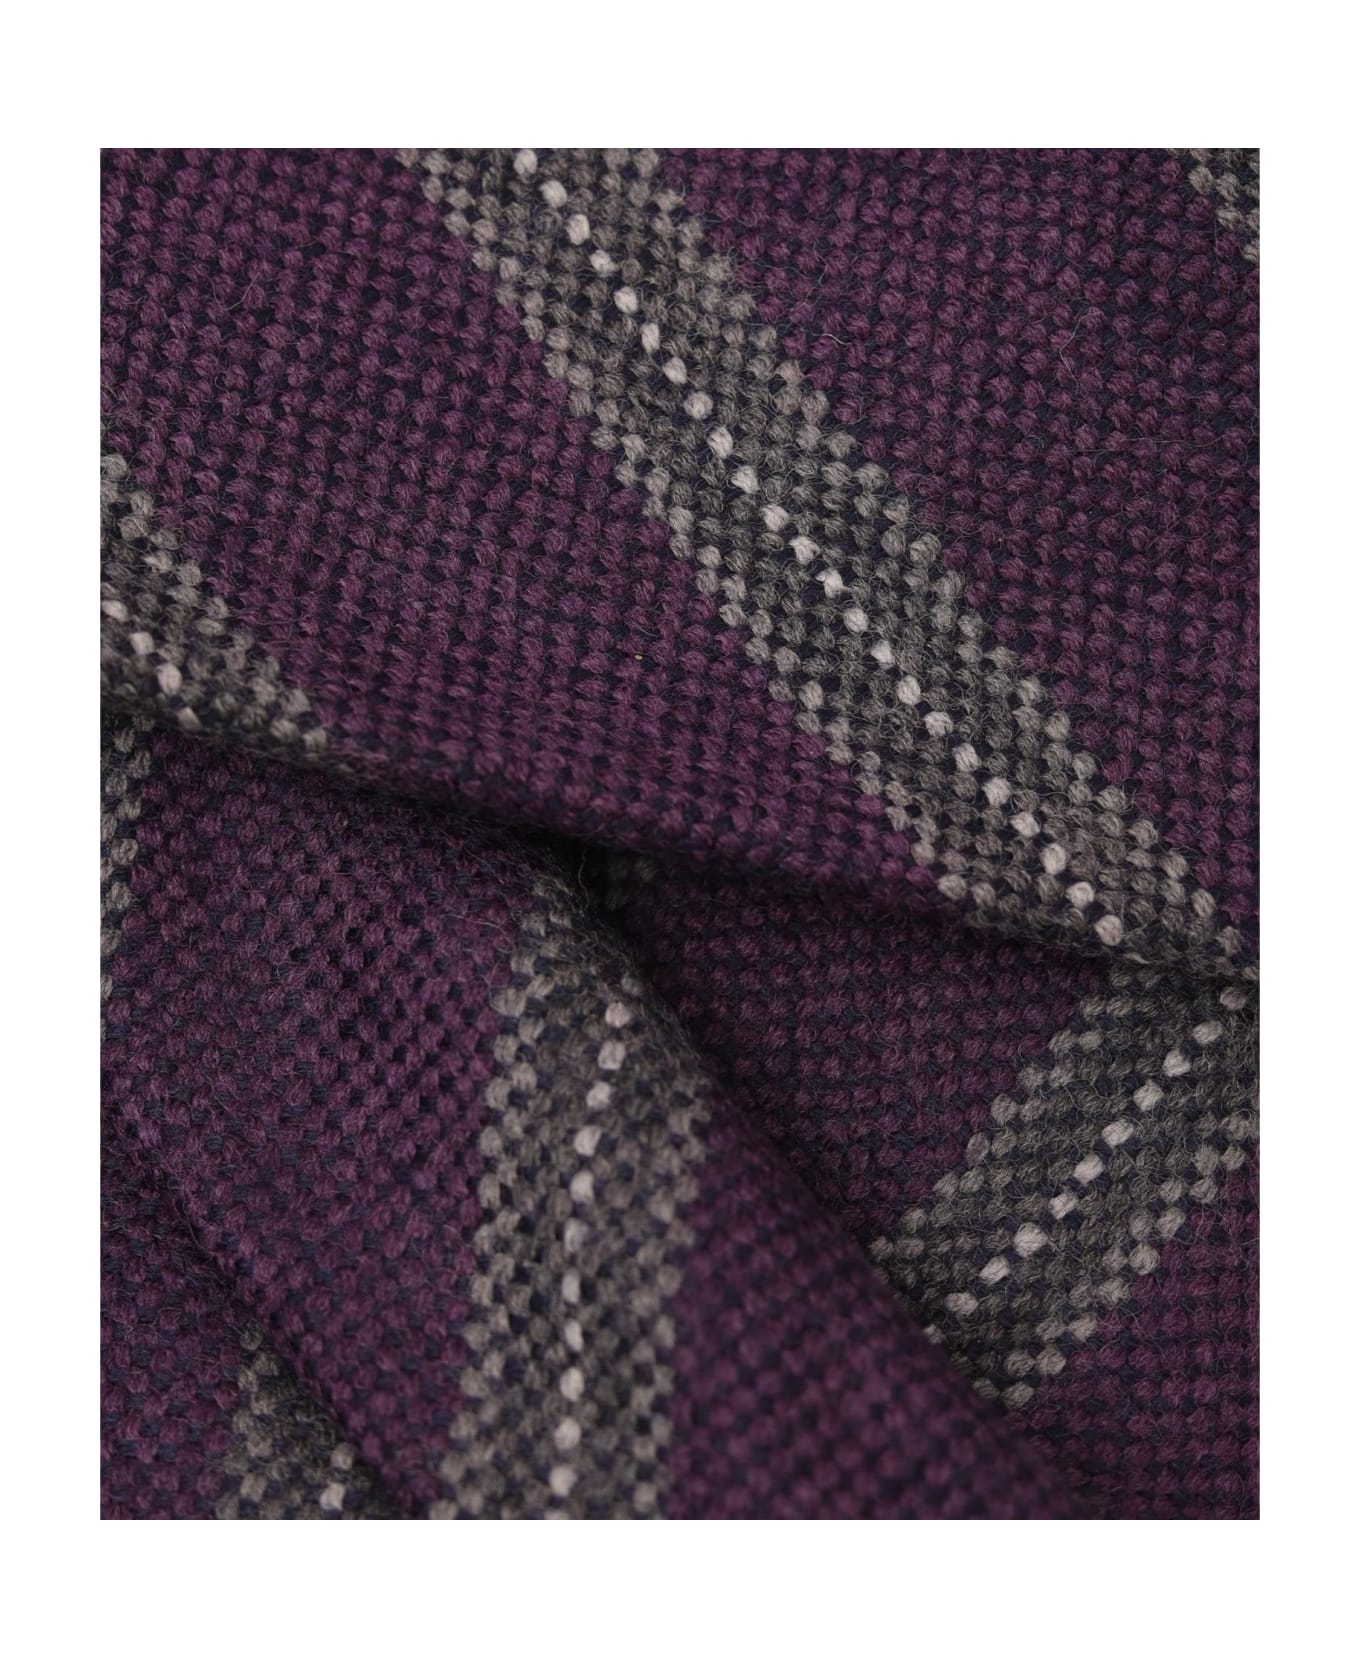 Larusmiani Tie 'porta Nuova' Tie - Purple ネクタイ